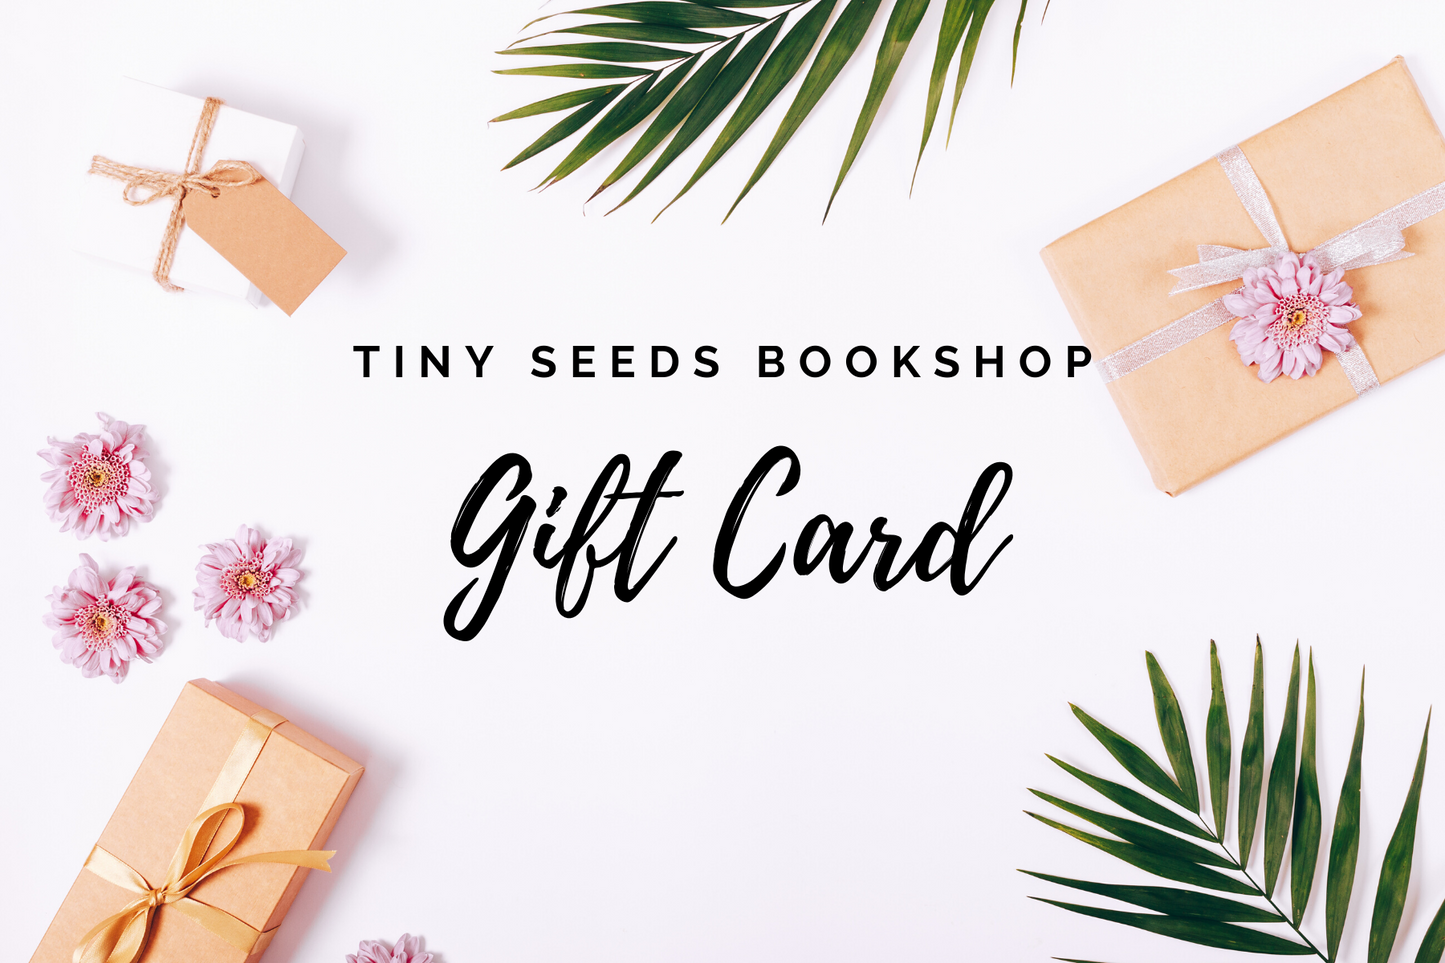 Tiny Seeds Bookshop Gift Card